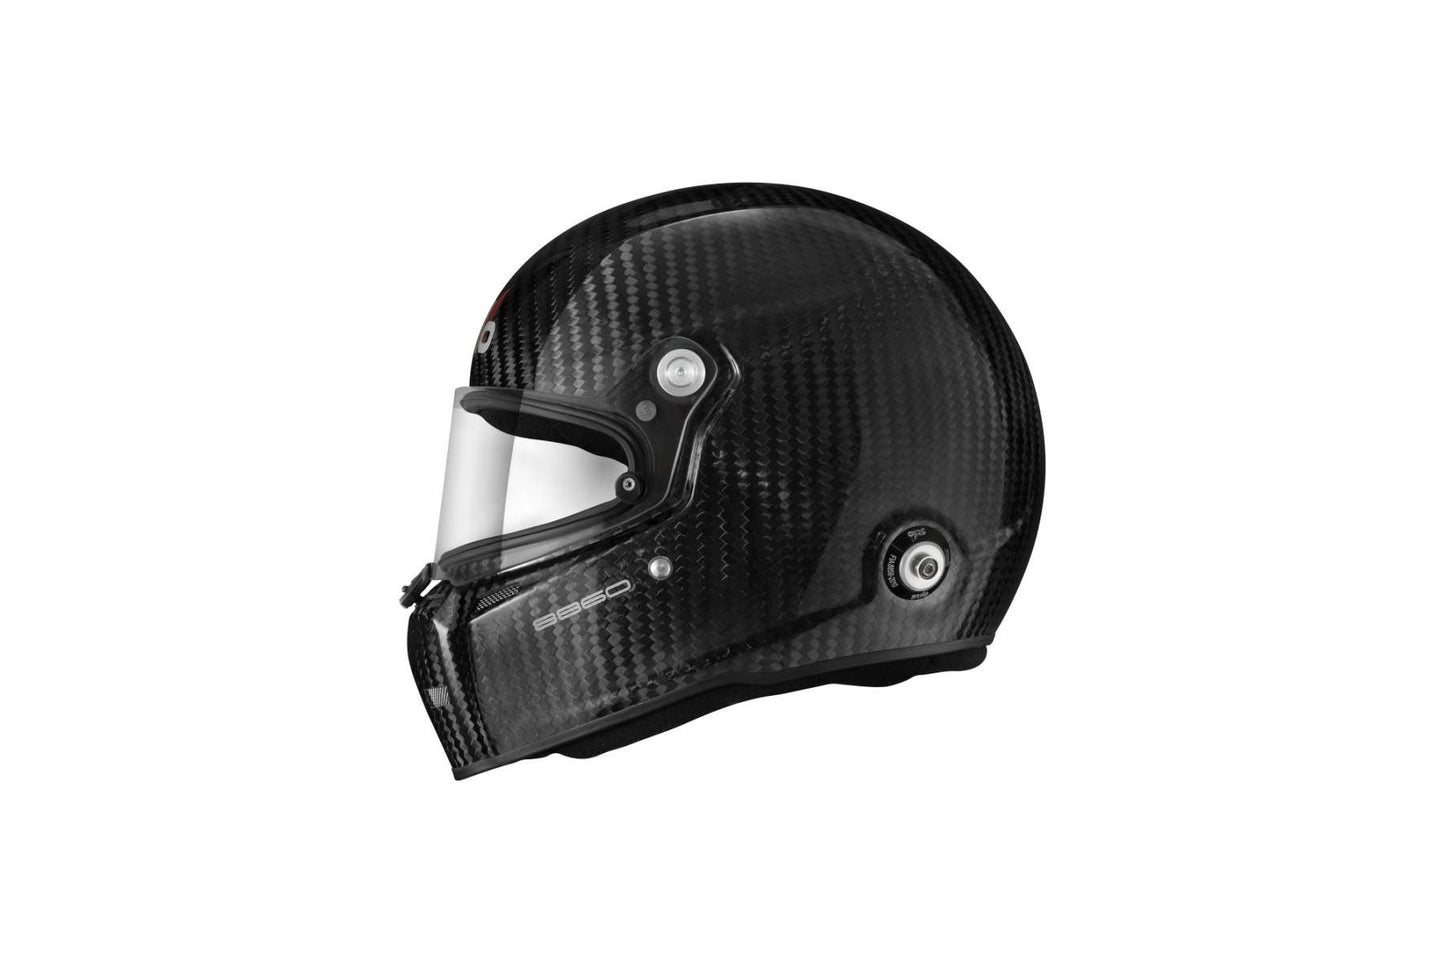 Stilo Helmet ST5F / ST5FN FIA 8559-2015